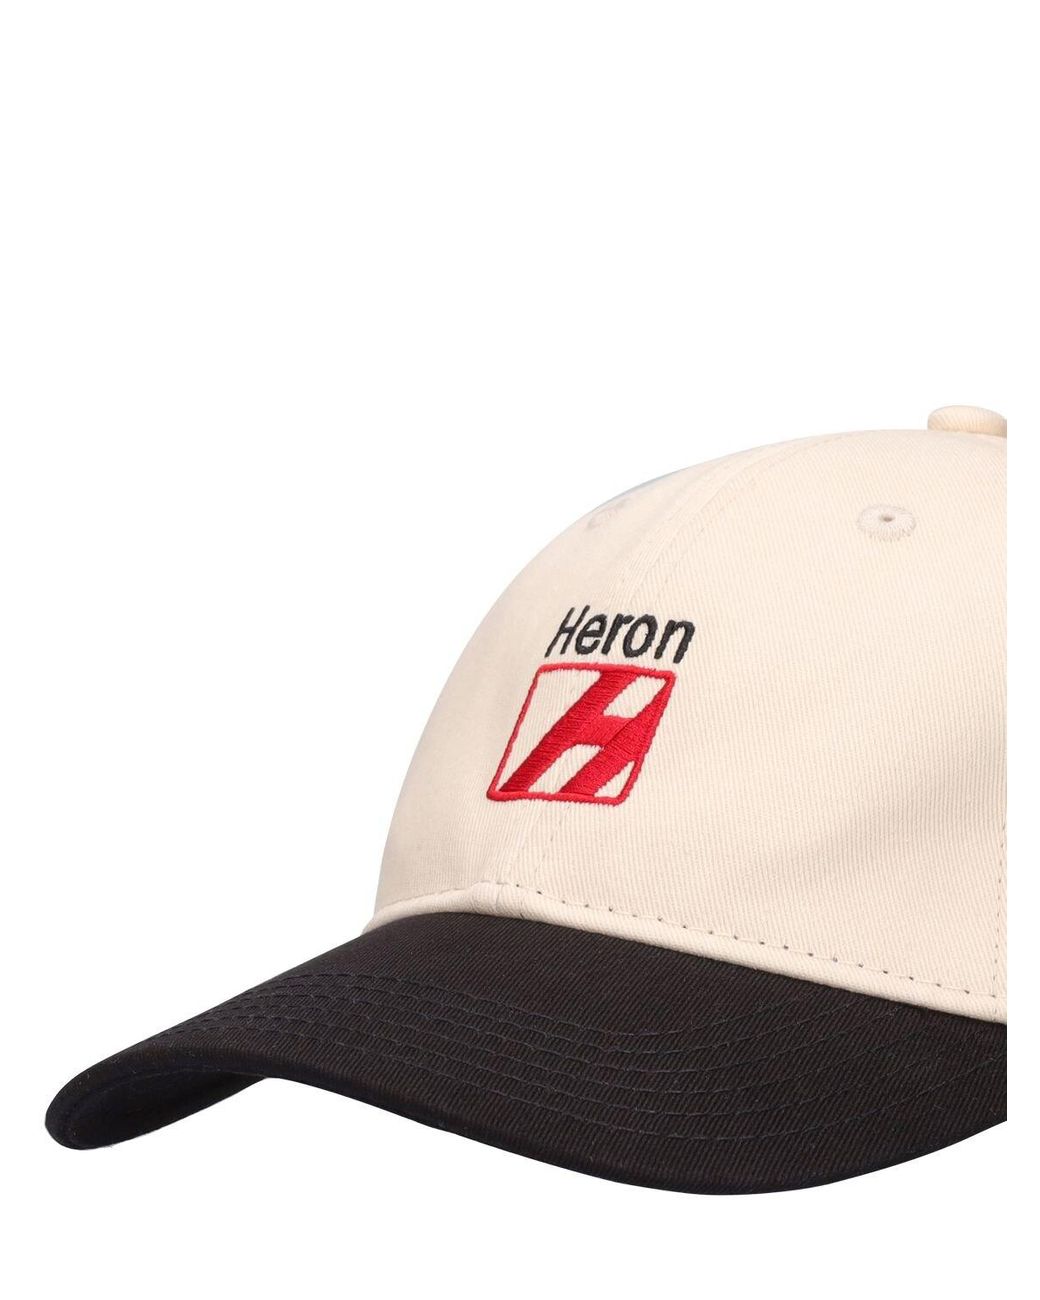 Heron Preston Heron Logo Cotton Baseball Cap in White/Red Mens Hats Heron Preston Hats for Men Pink 